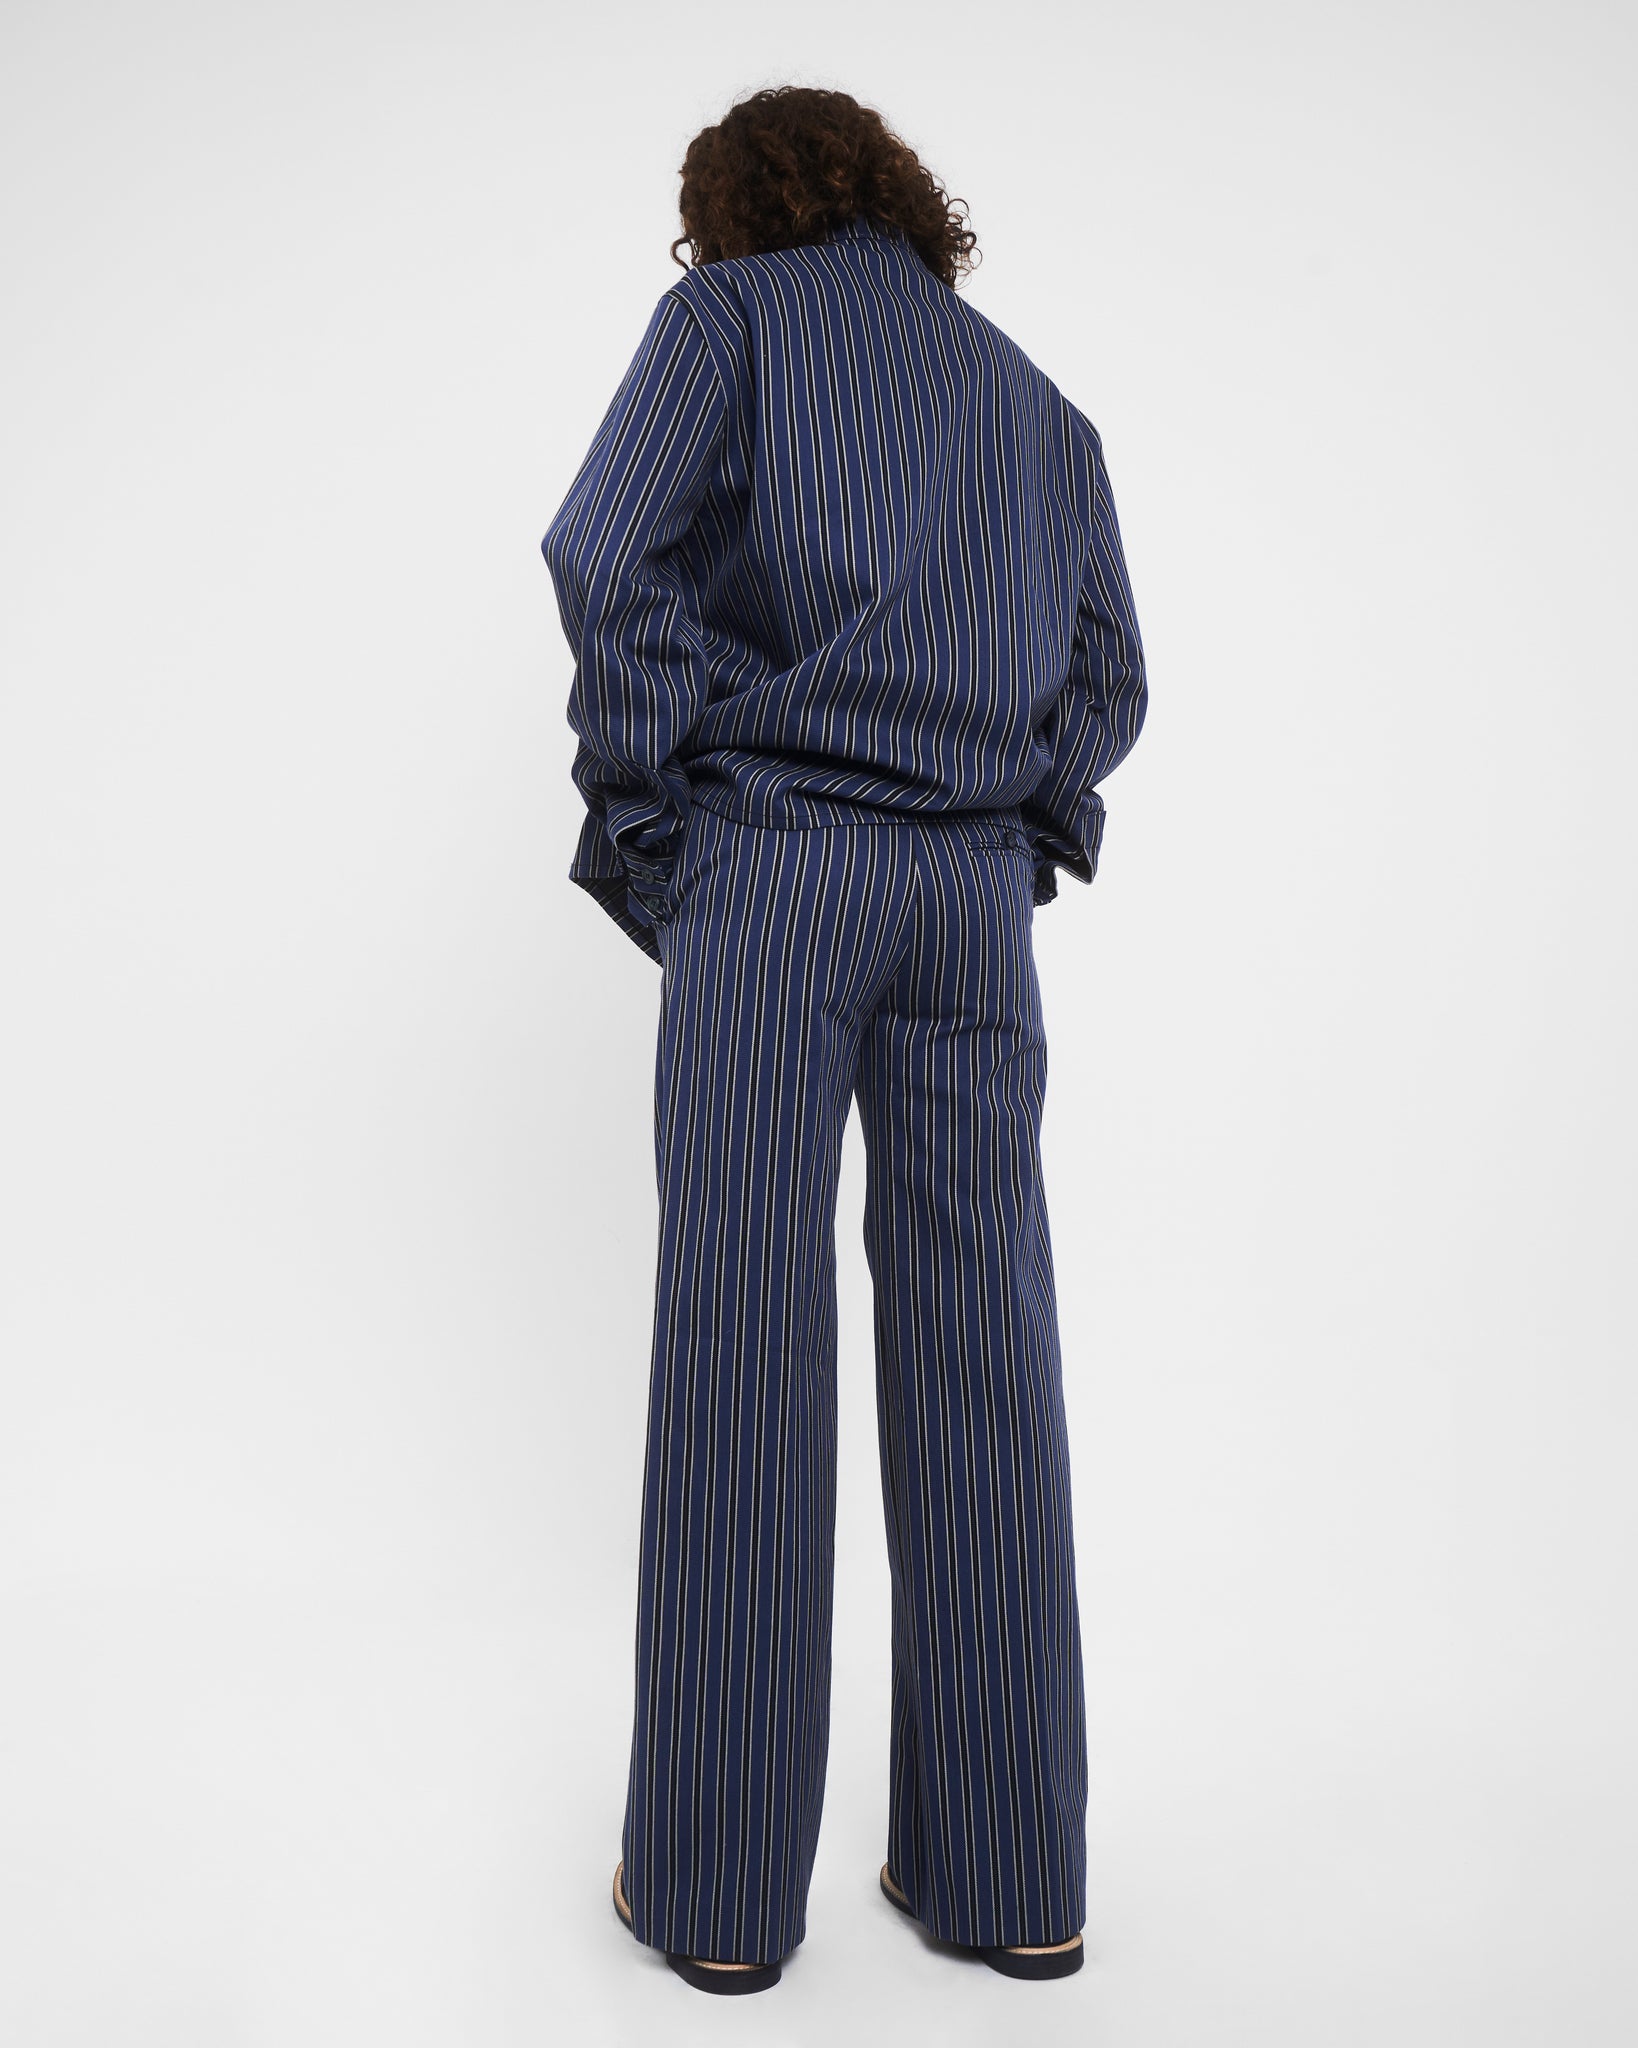 BELGRADO trousers (W) / PRE-ORDER